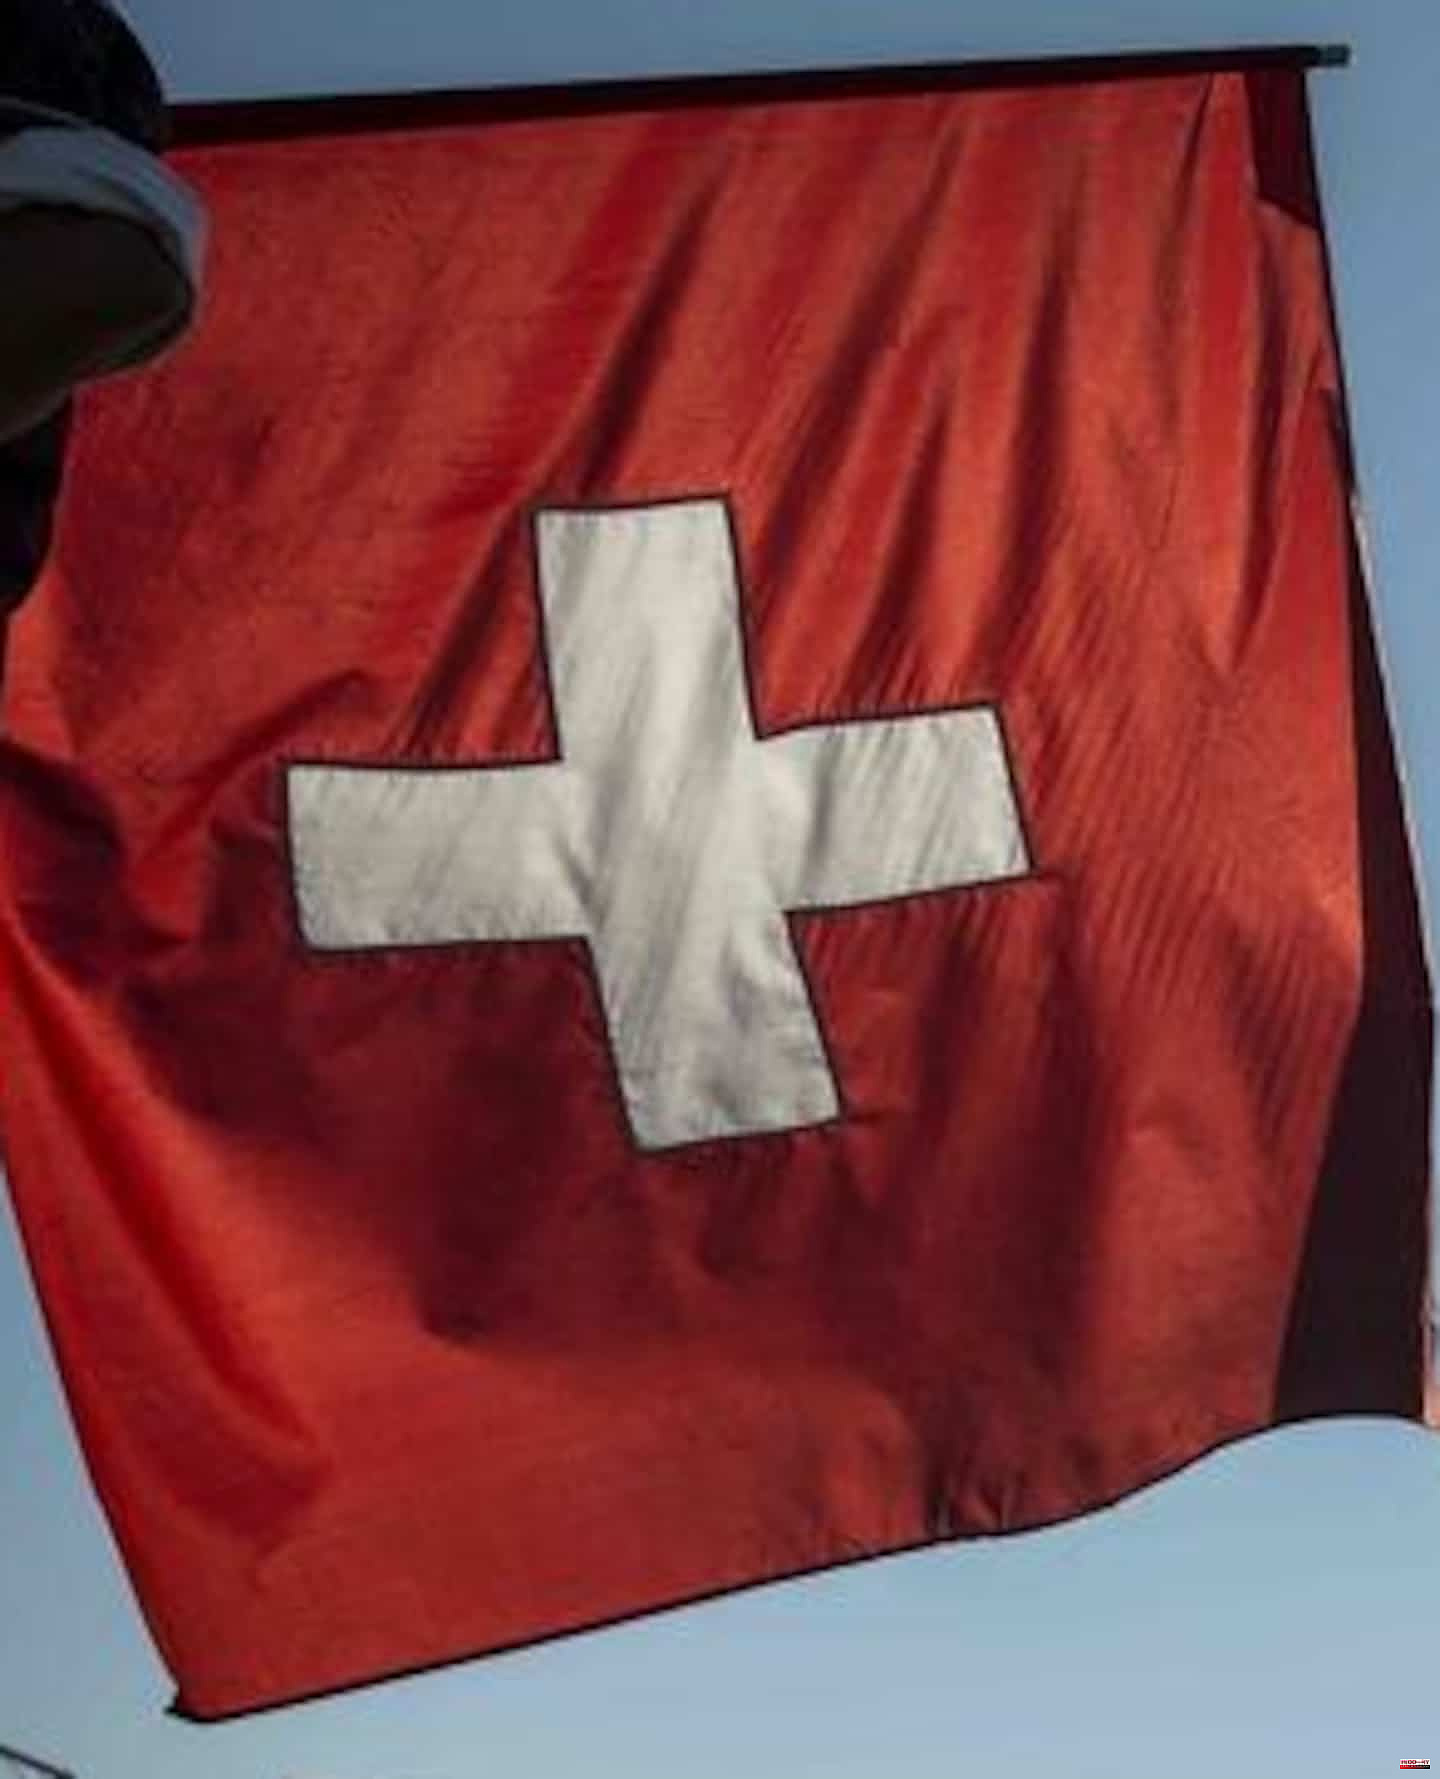 Switzerland adopts self-determination for organ donation